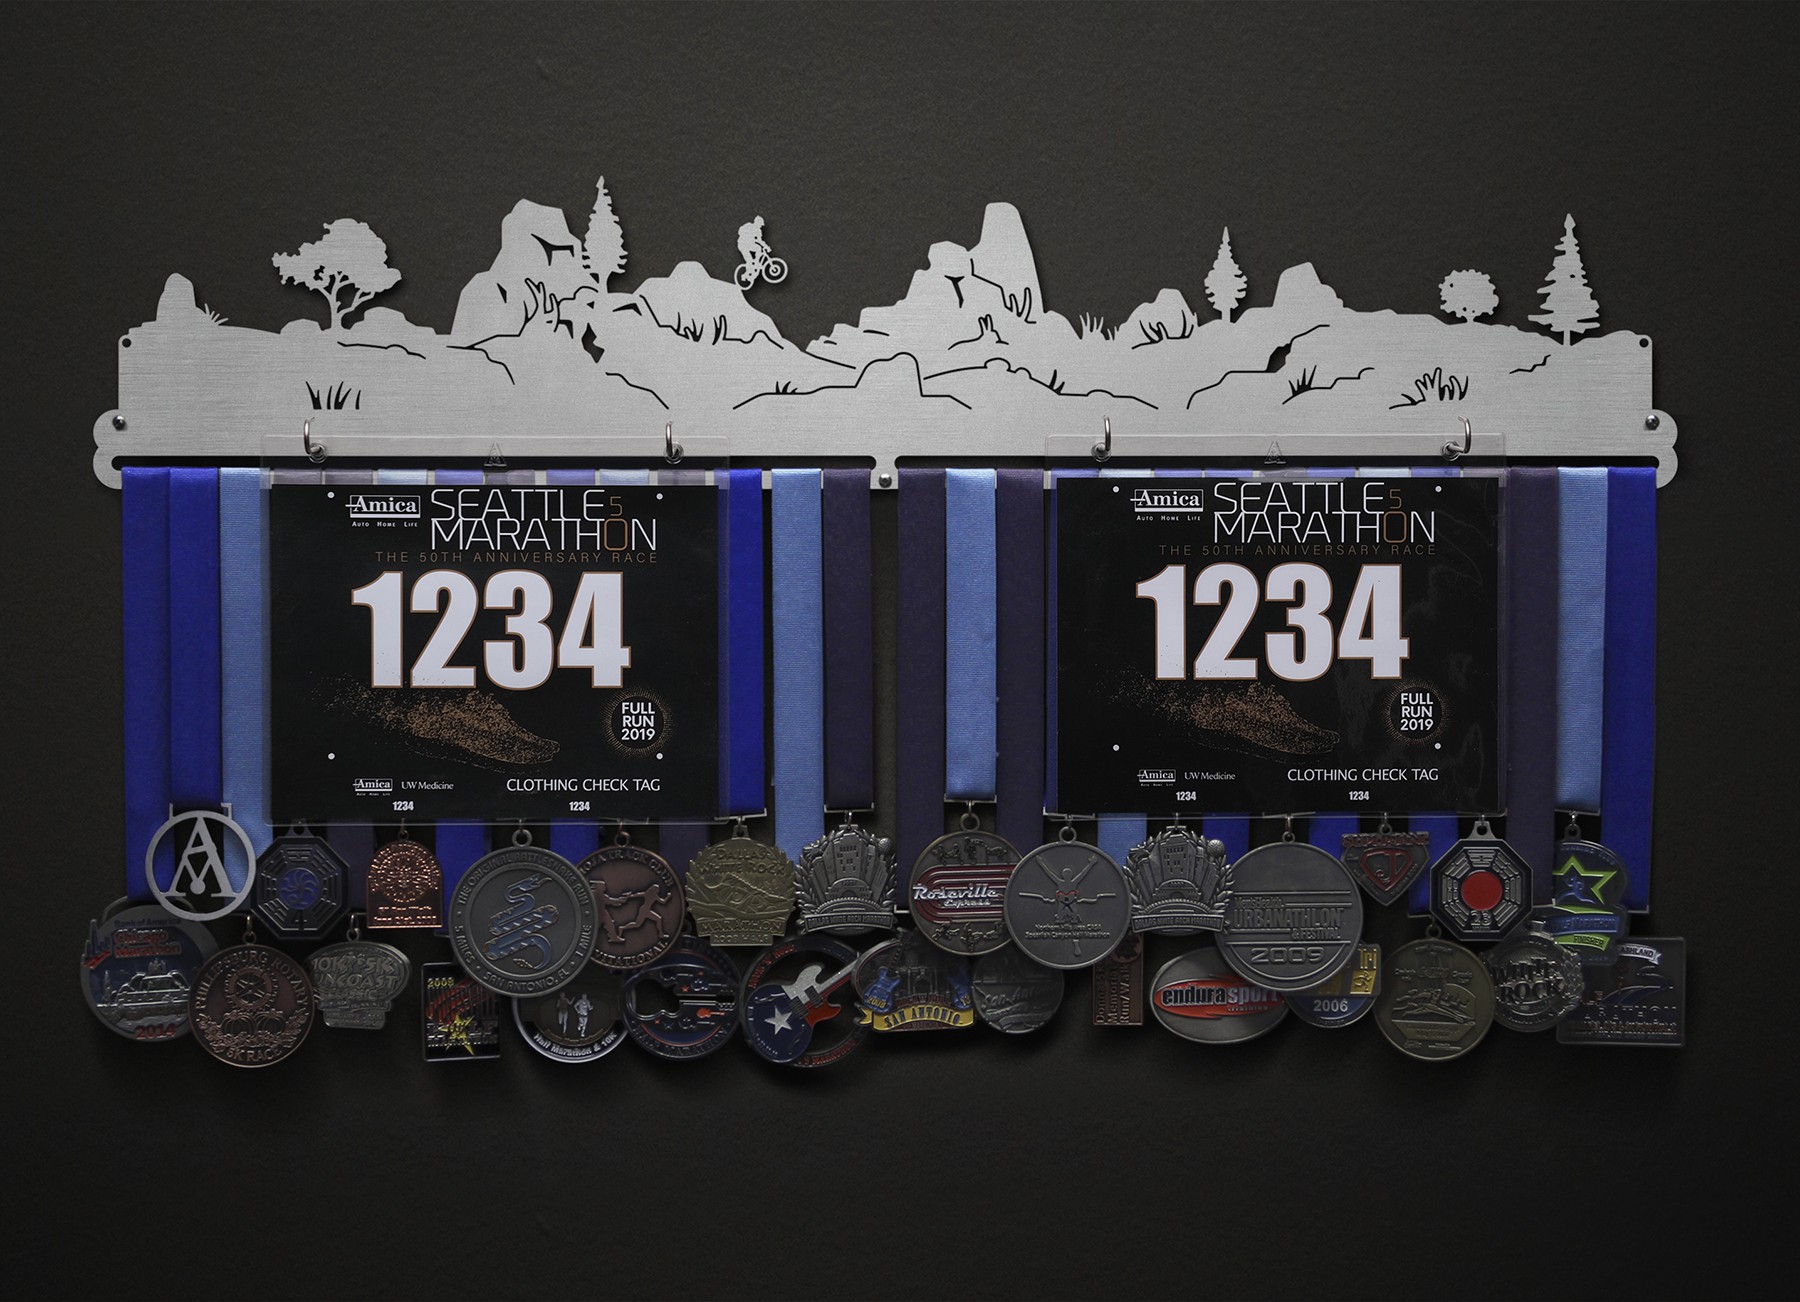 Mountain Bike Bib and Medal Display